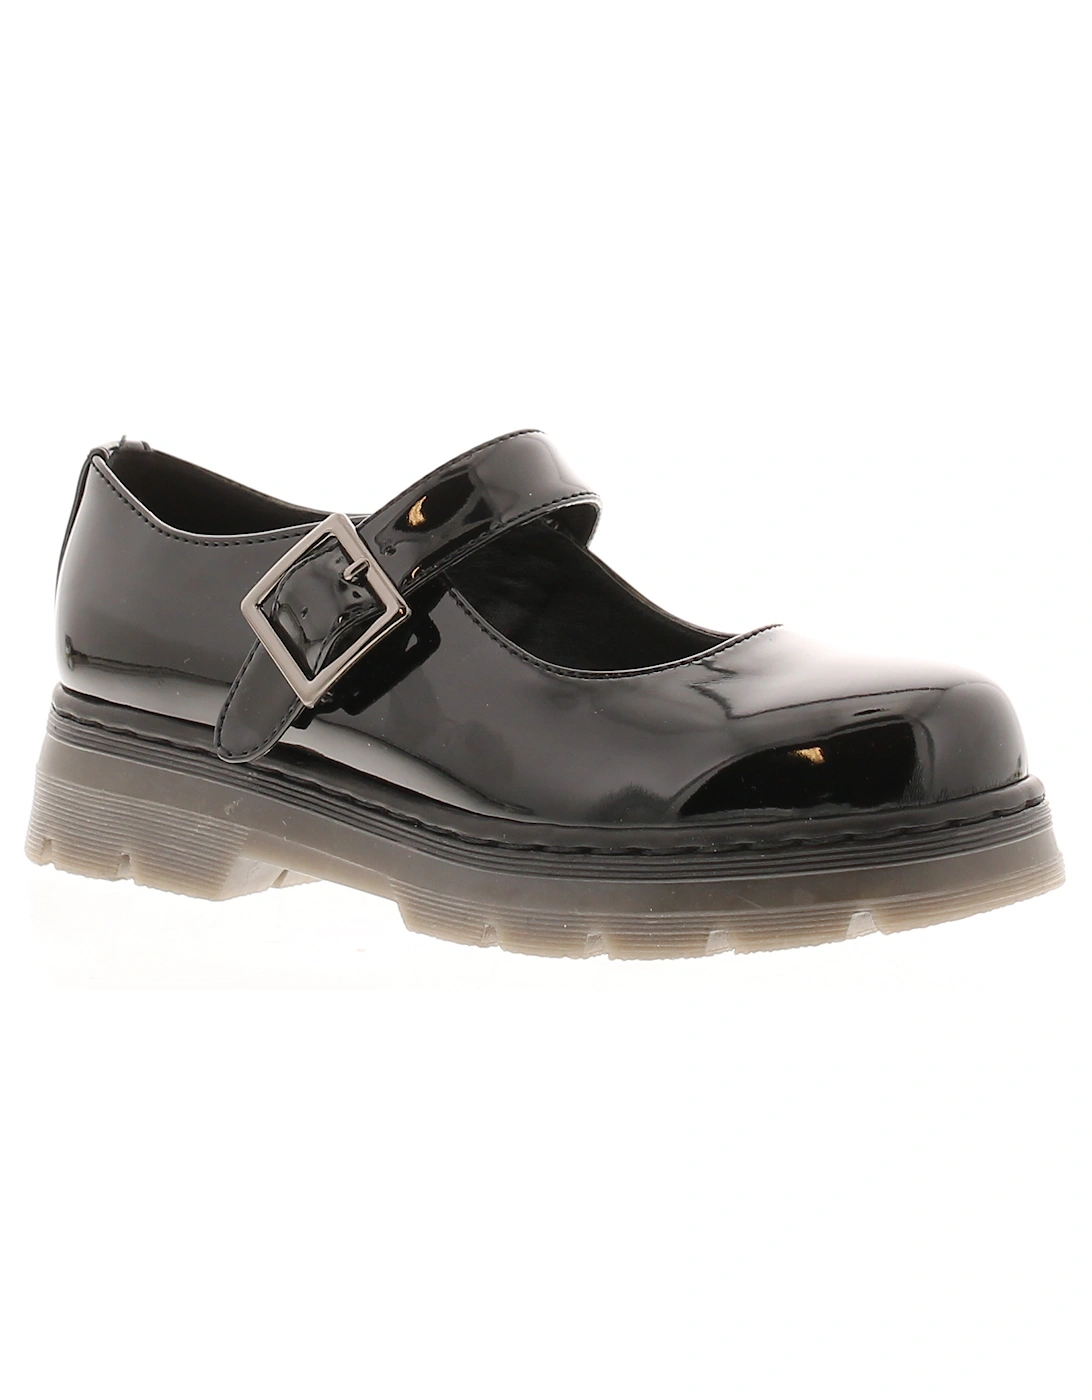 Girls School Shoes twister black UK Size, 6 of 5